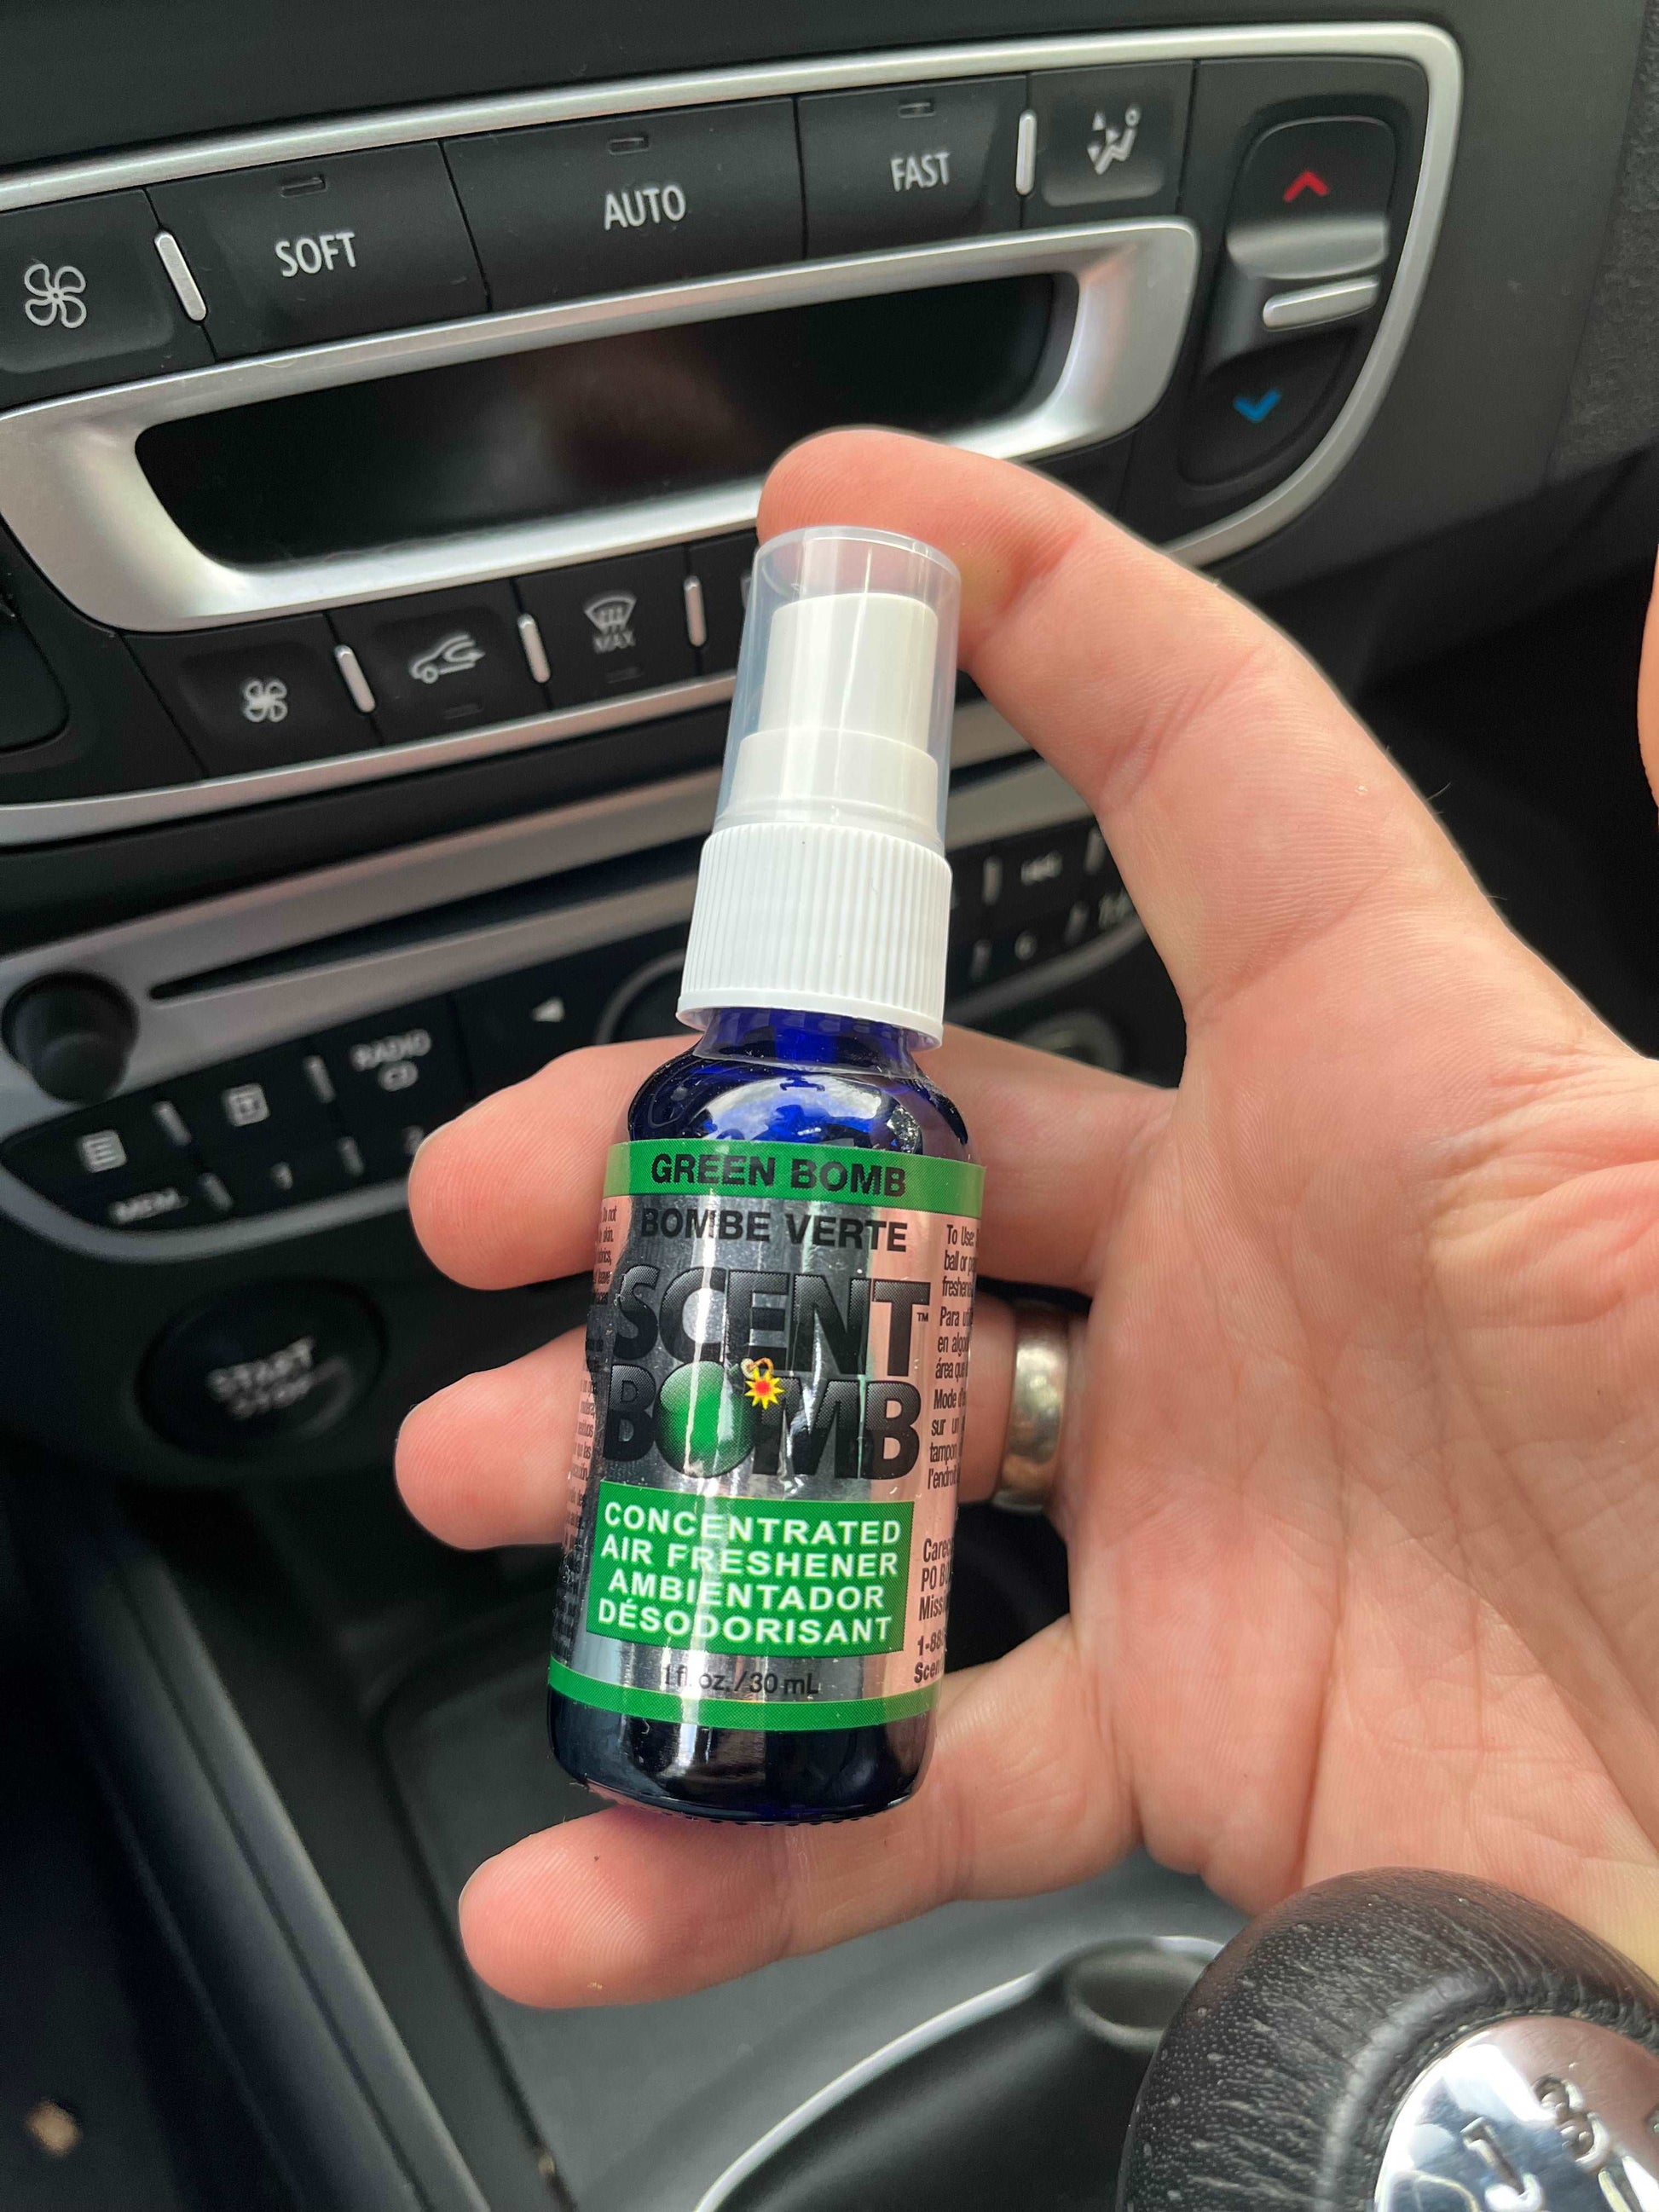 Scent Bomb Auto Parfum Spray - Green Bomb